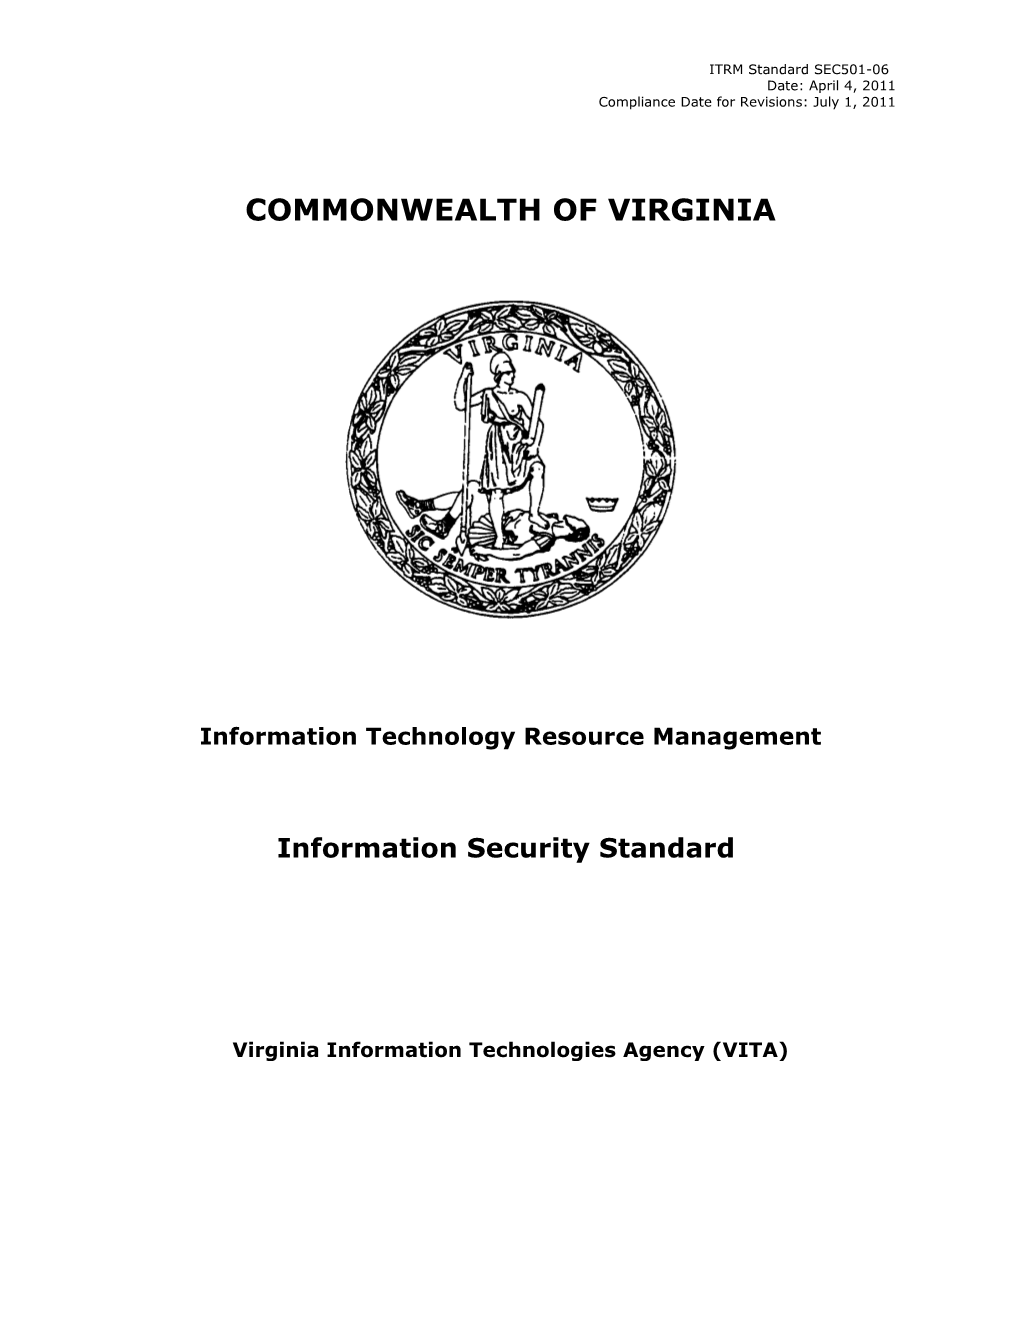 Information Security Standard - ITRM Standard SEC501-01